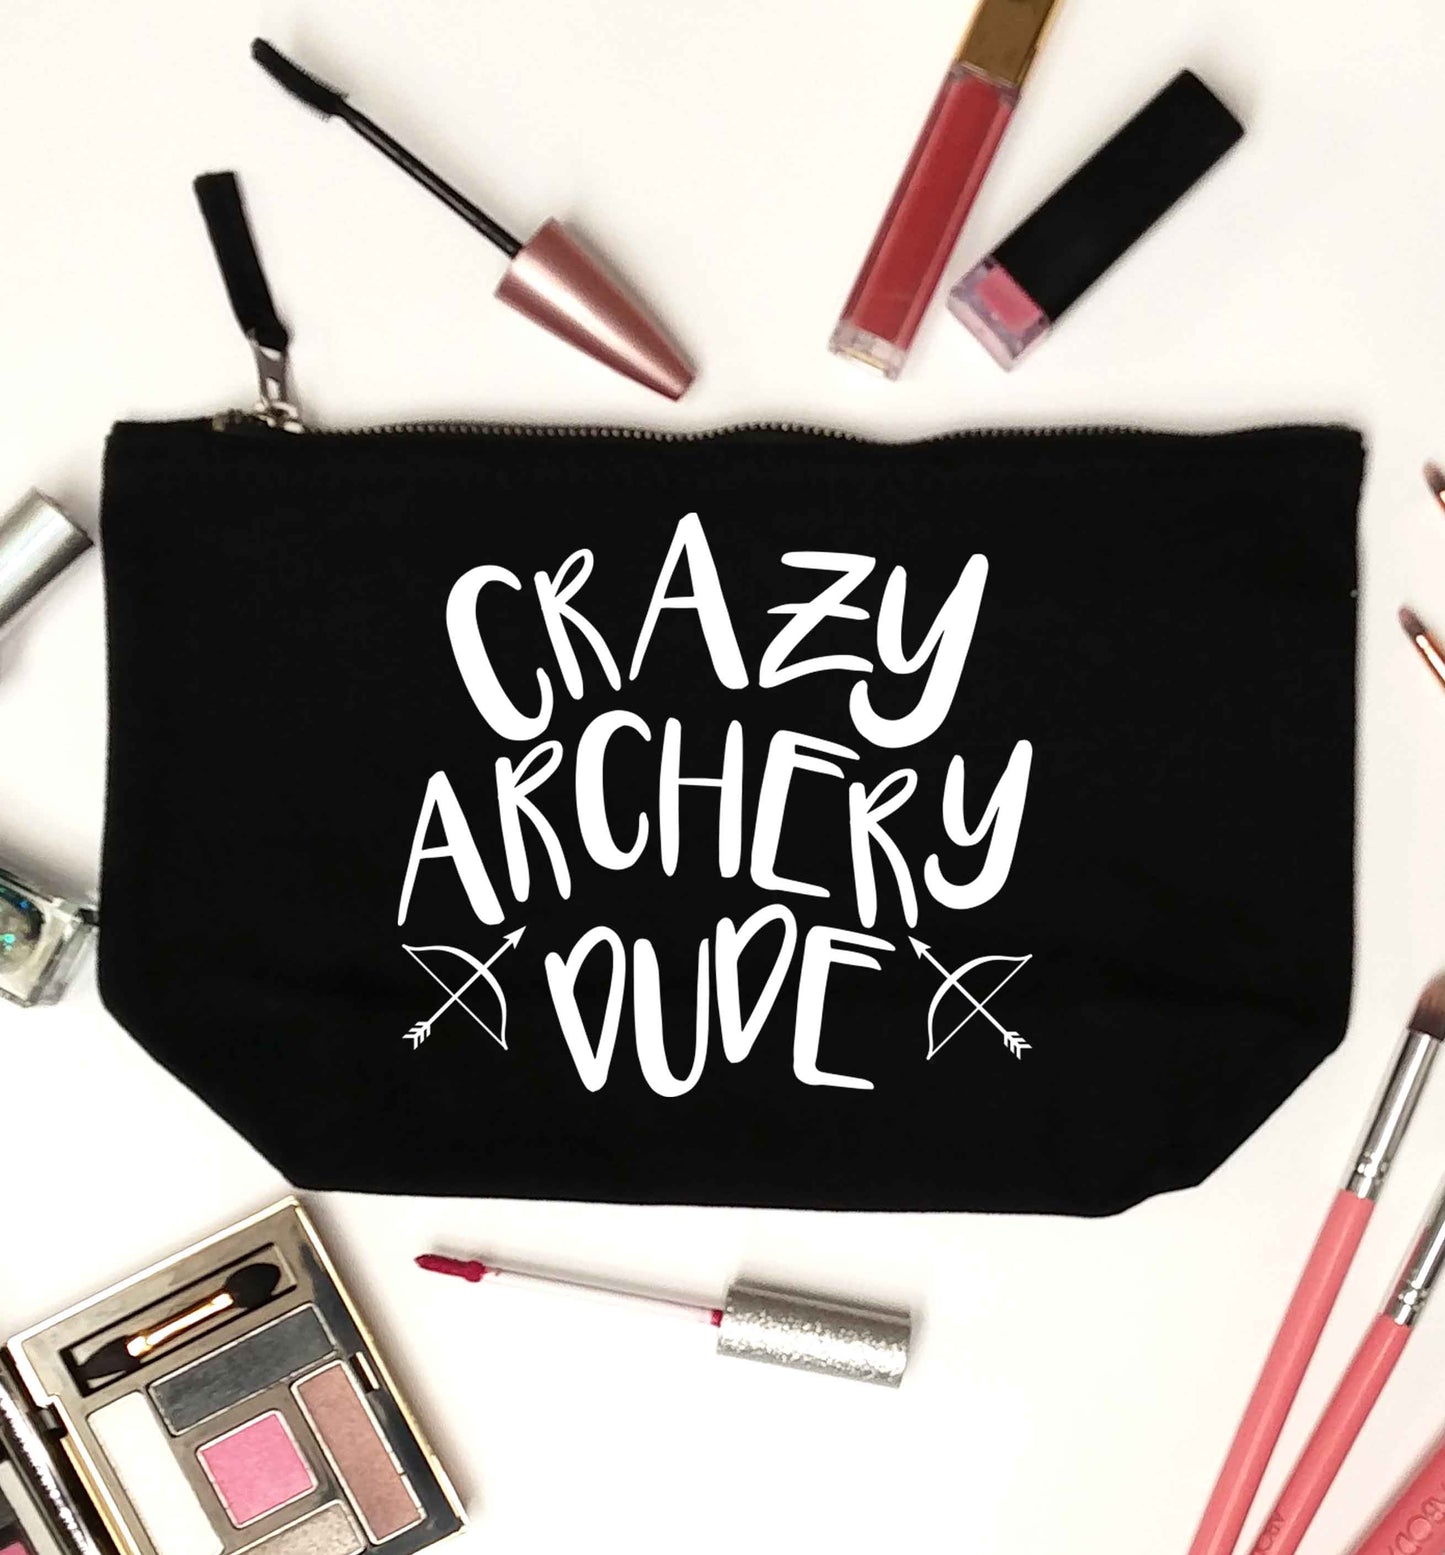 Crazy archery dude black makeup bag